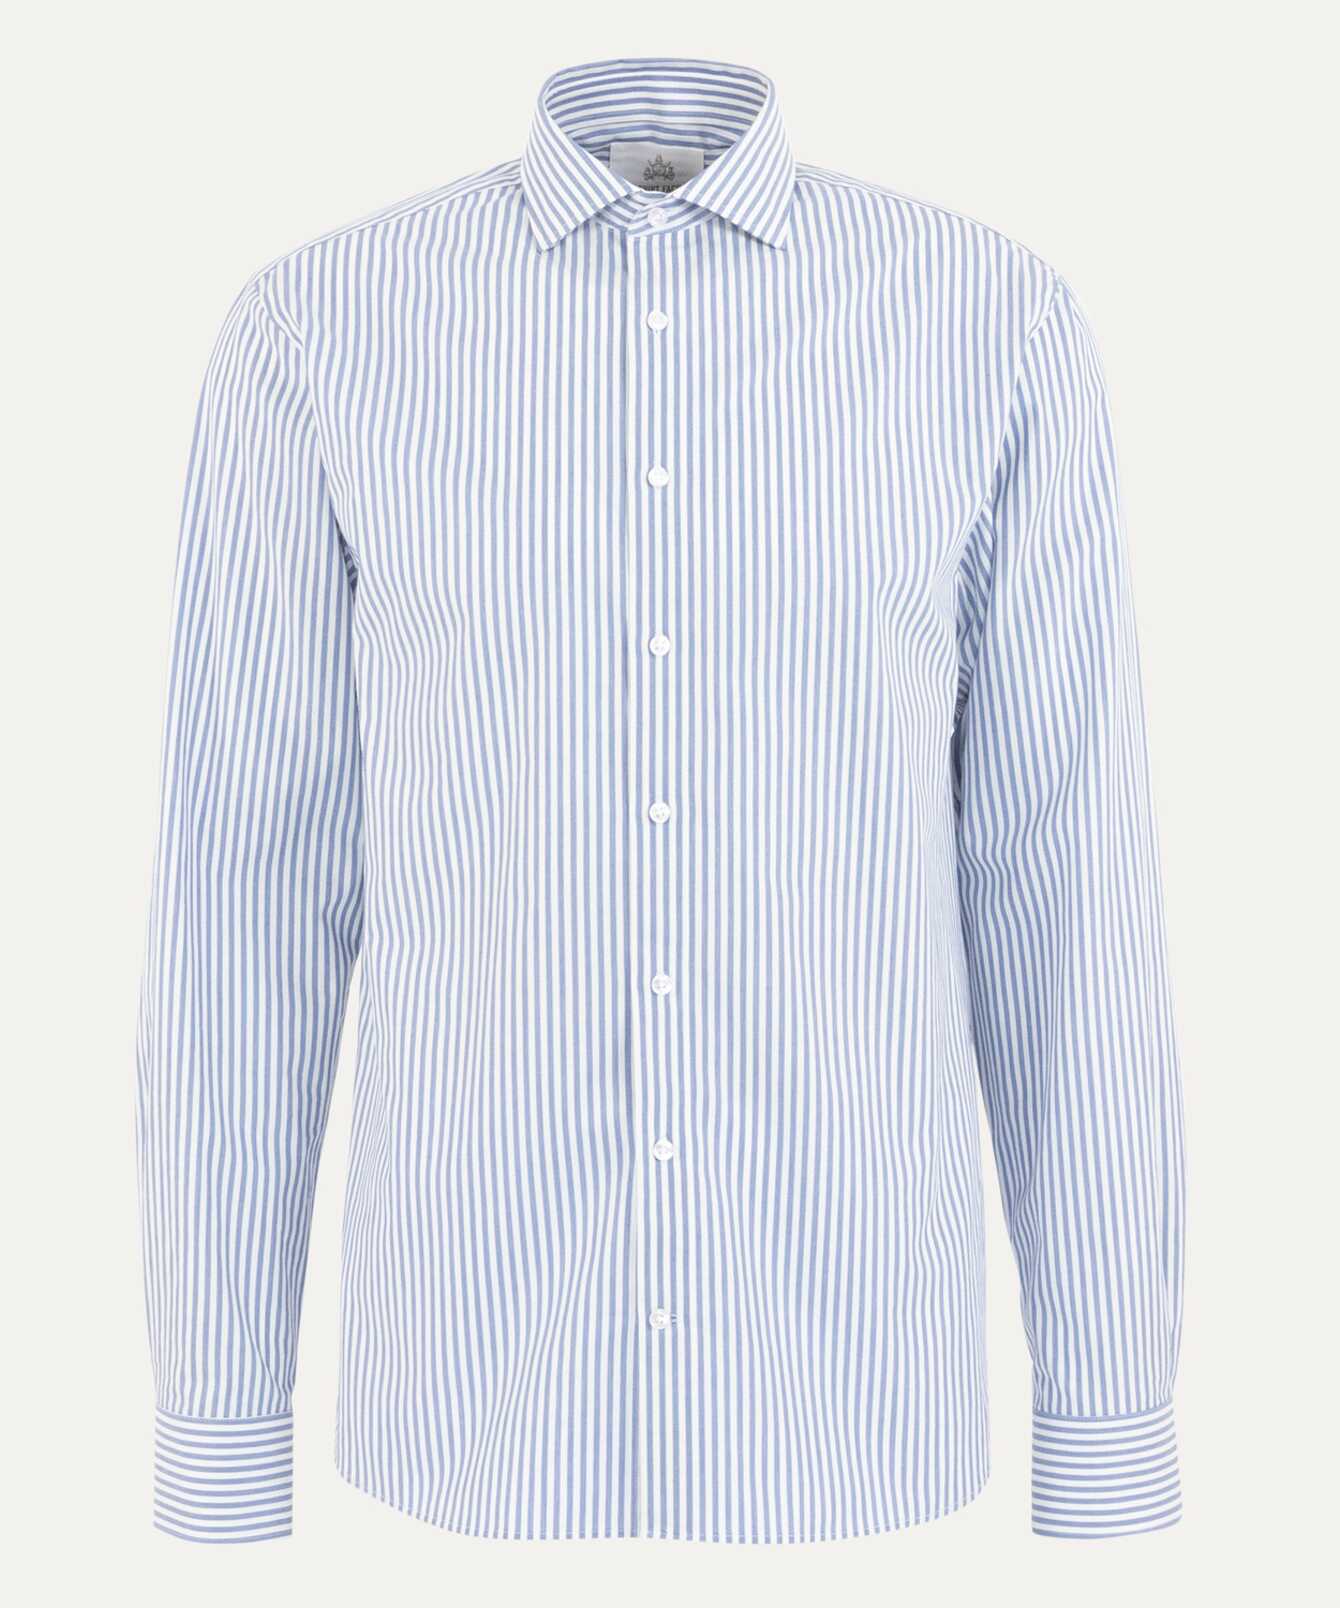 Shirt Montmelo Blue Stripe Shirt Extra Long Sleeve The Shirt Factory